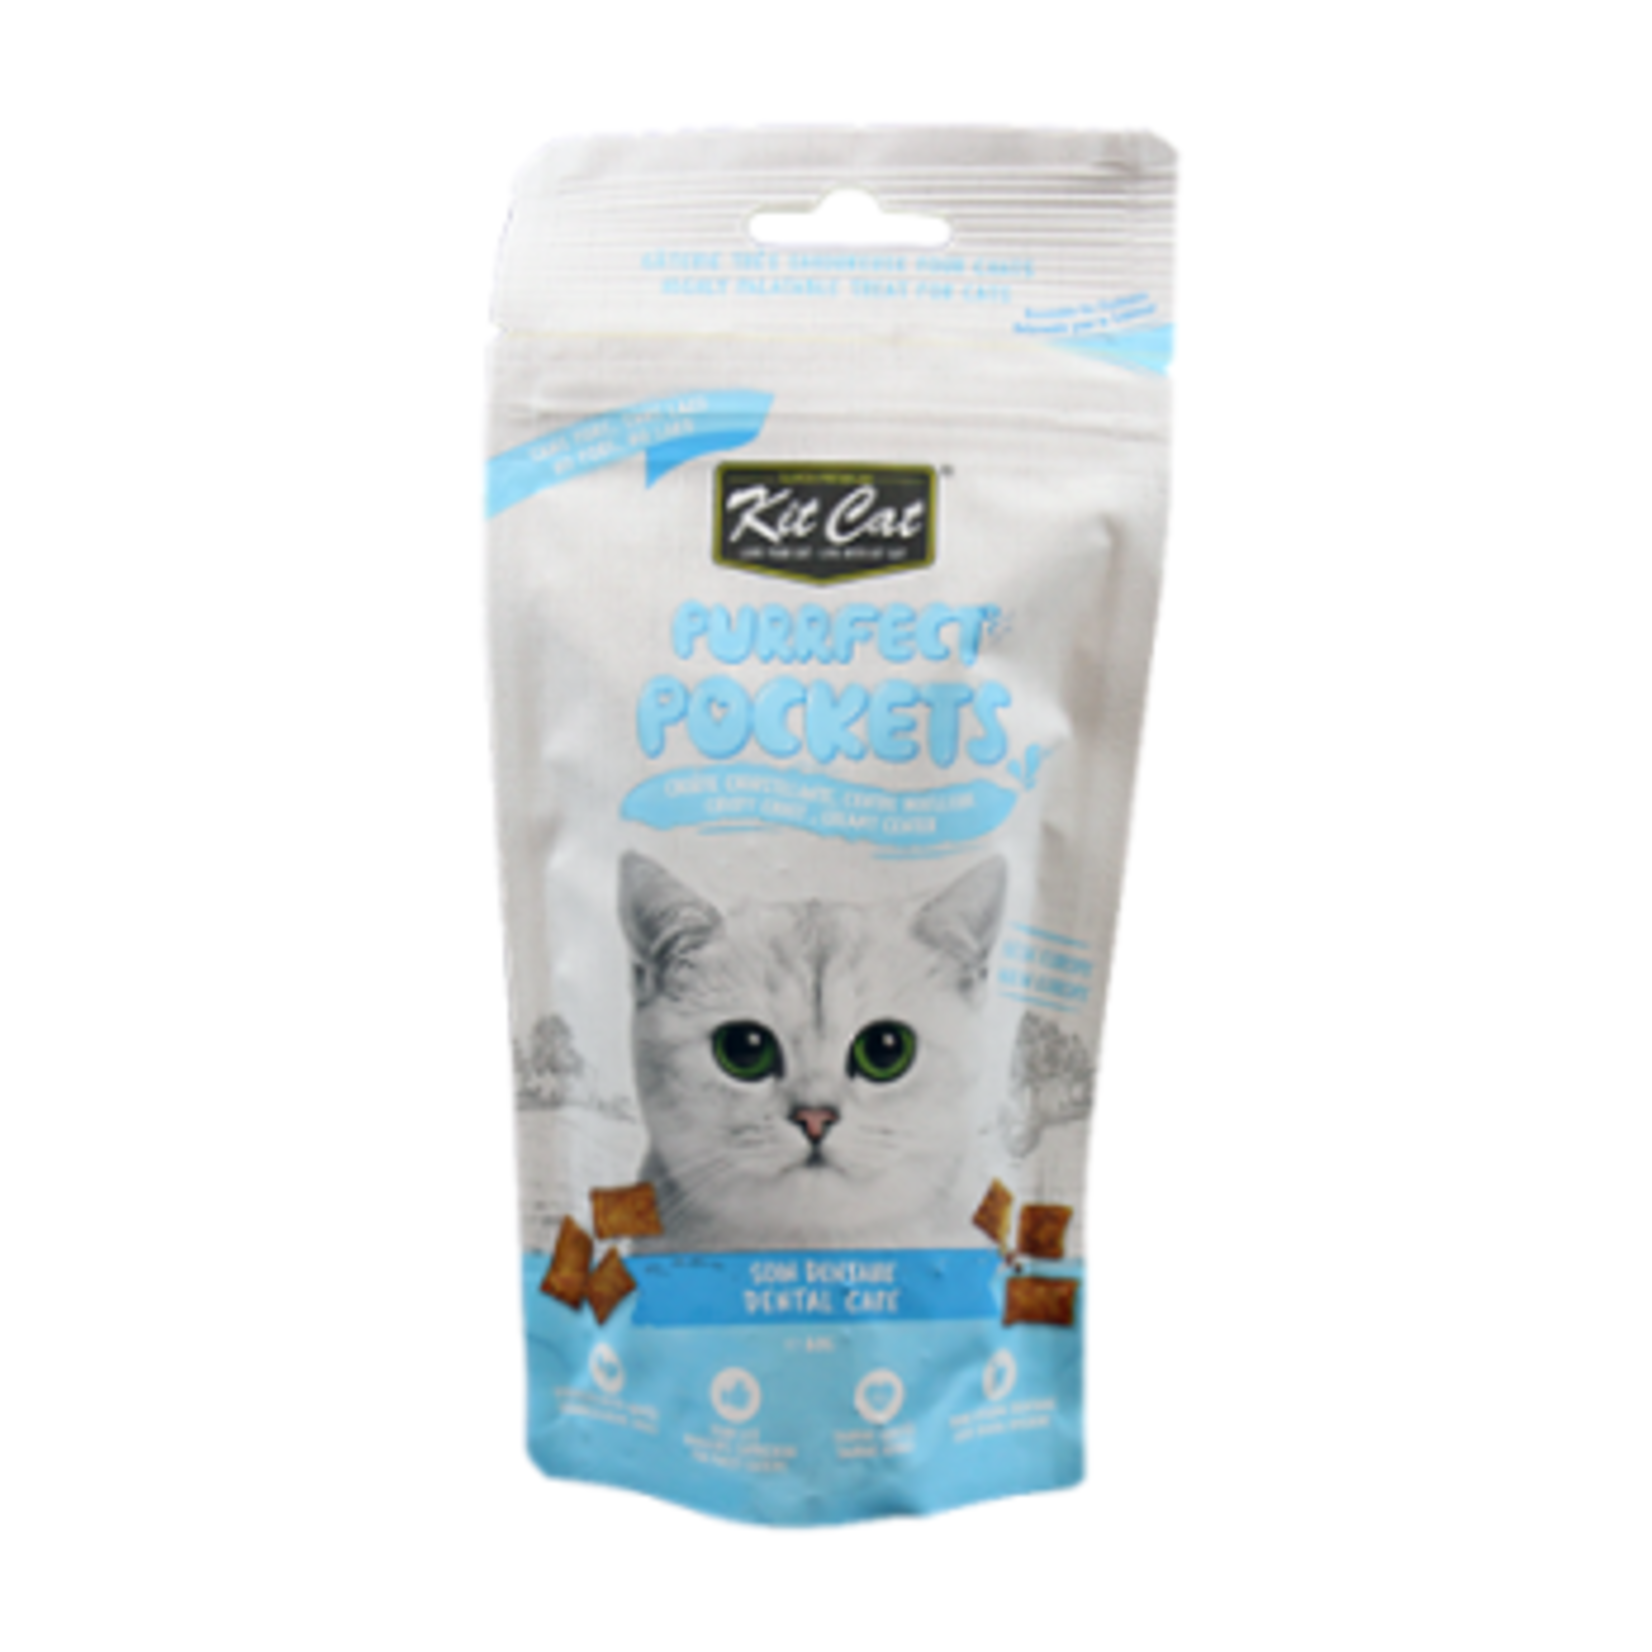 Kit Cat Purrfect Pocket - Dental Care - Cat Treat - 60g